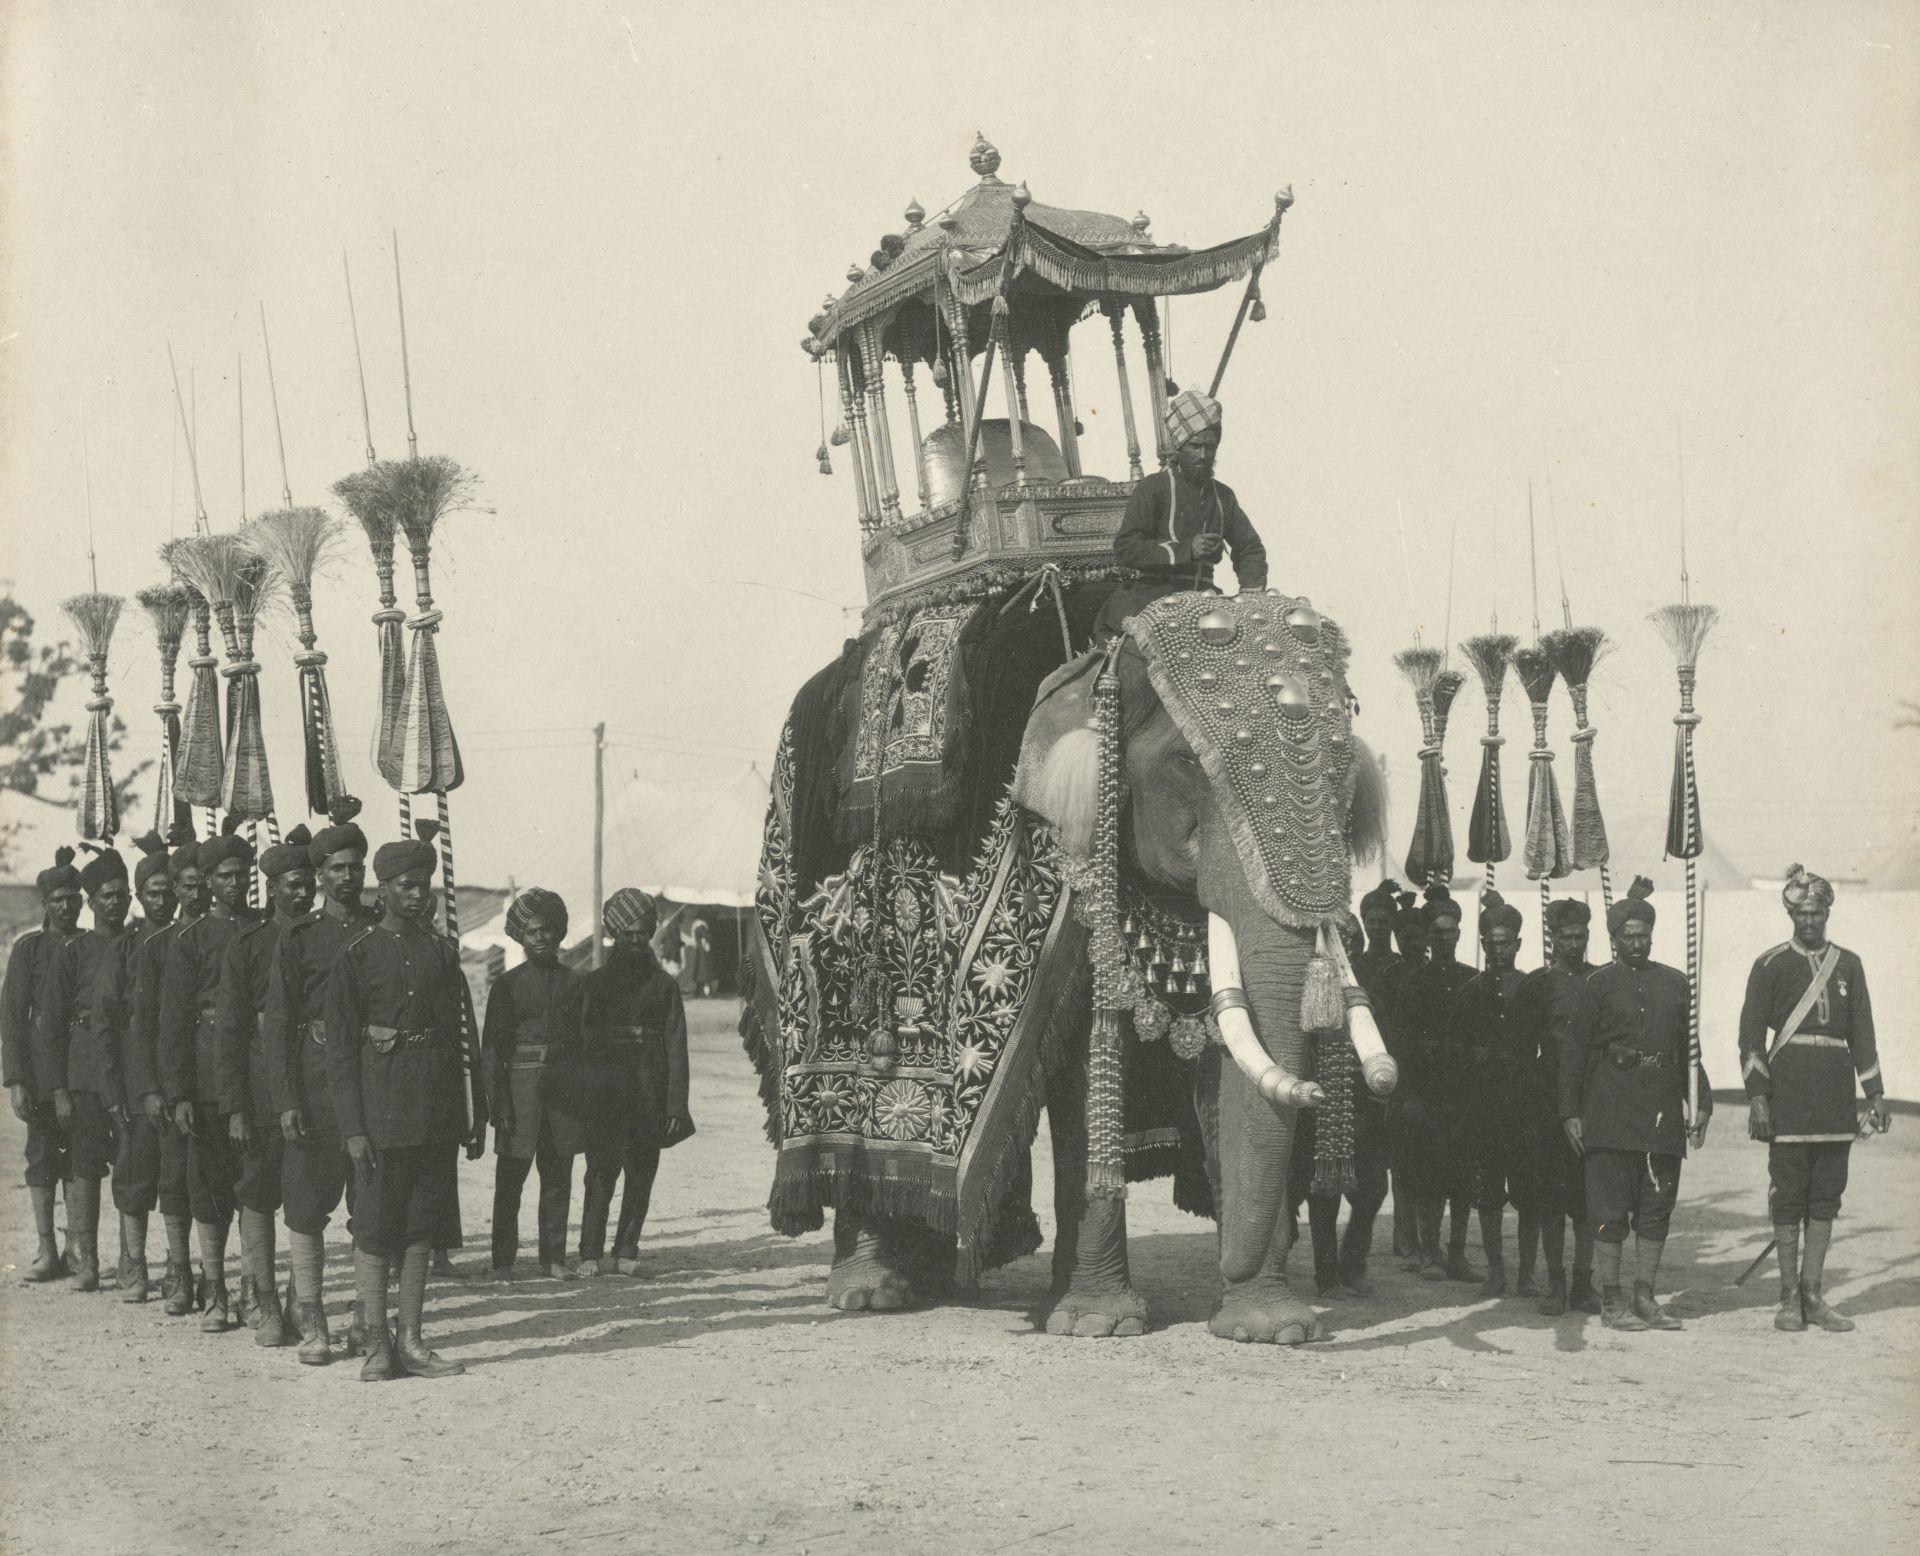 INDIA - DELHI DURBAR 1903 BOURNE (SAMUEL) and CHARLES SHEPHERD. The Coronation Durbar. Delhi 1903...